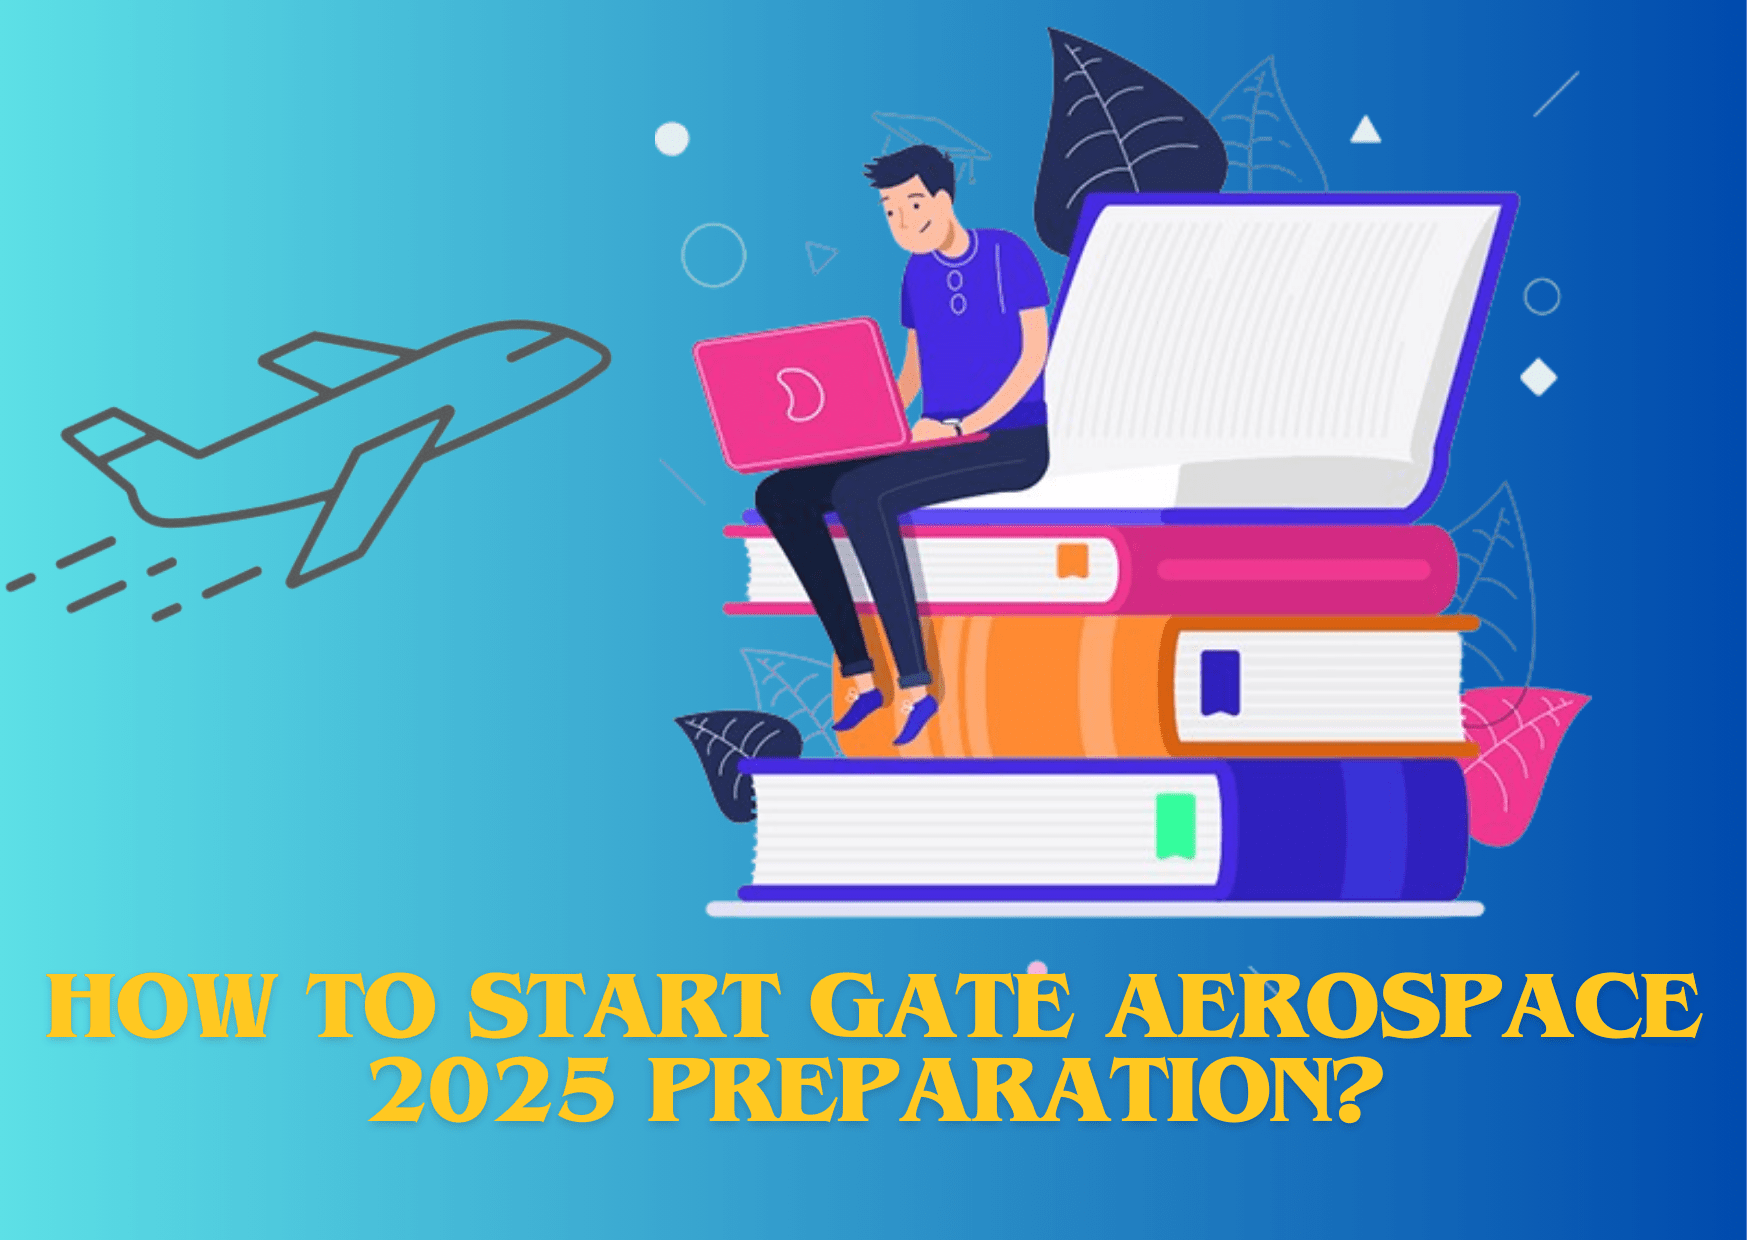 Gate aerospace 2025 preparation